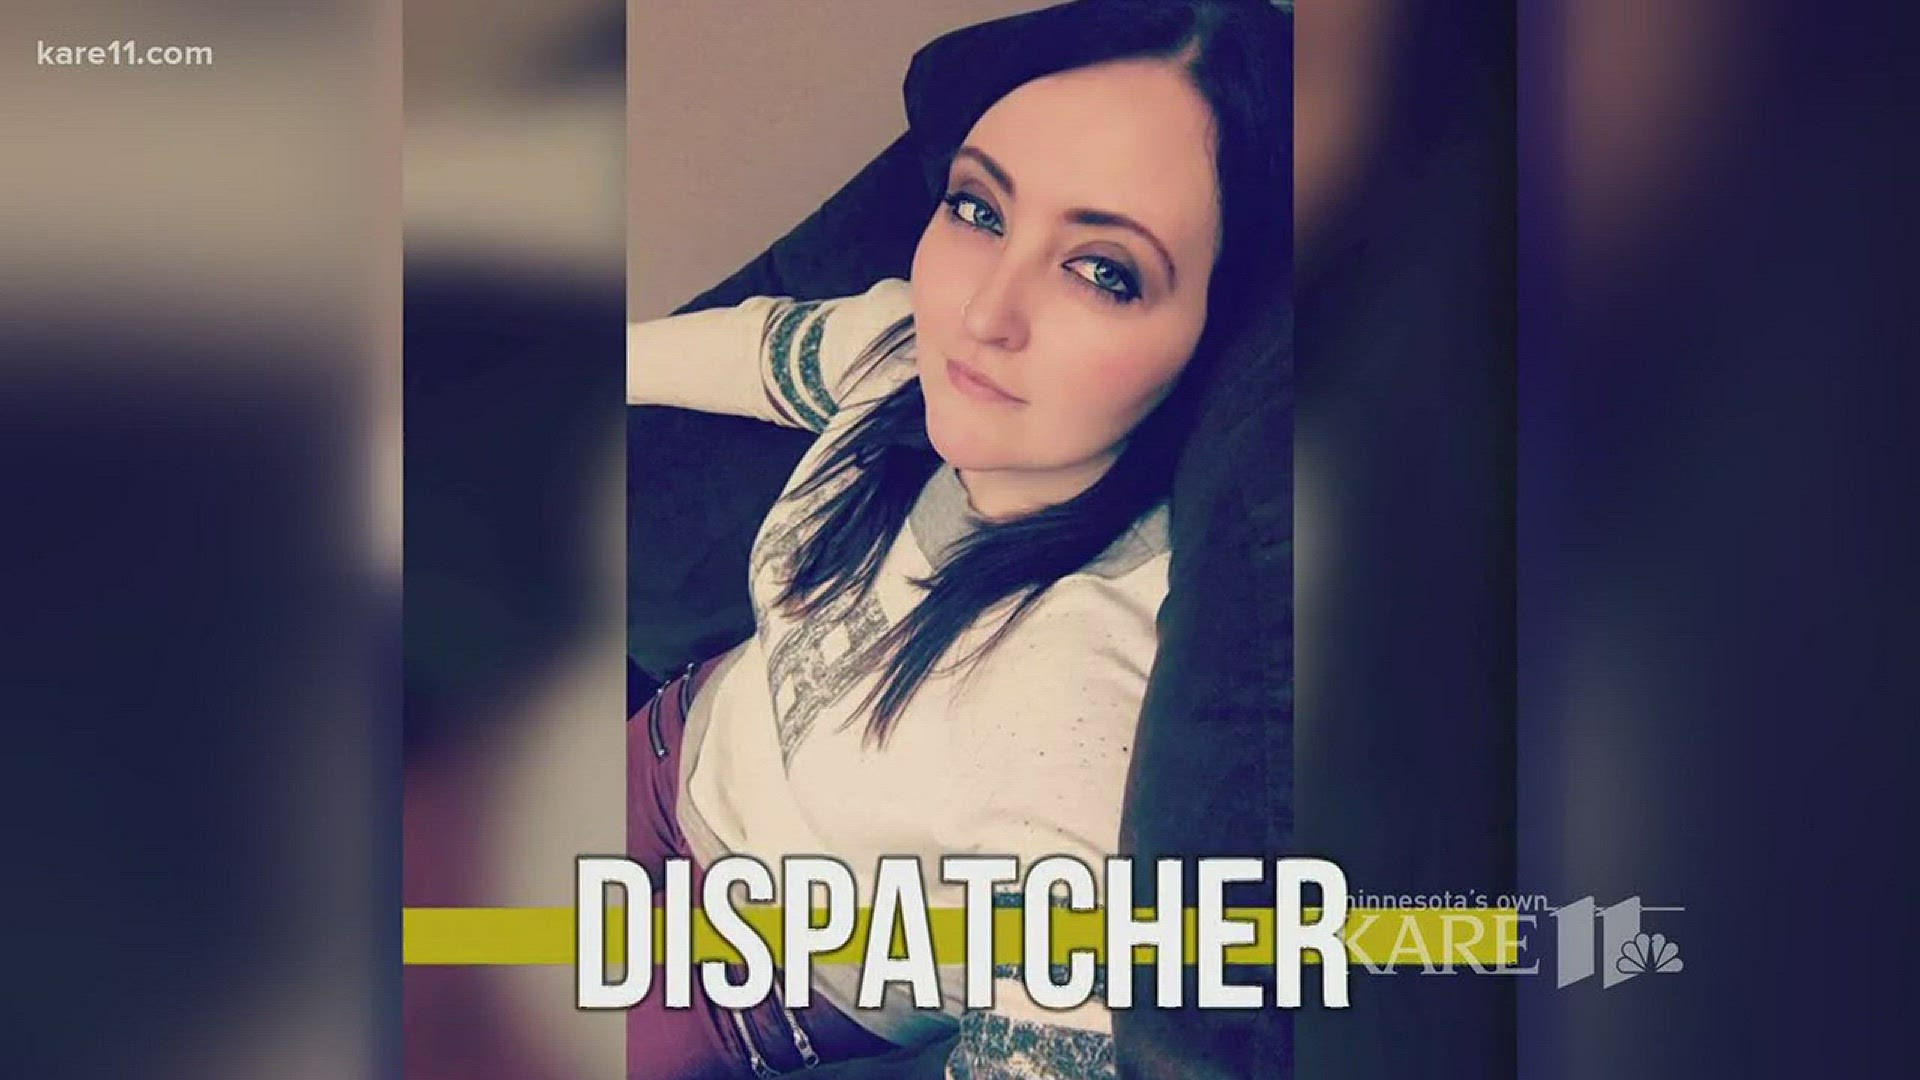 Family remembers Minneapolis 911 dispatcher killed in crash